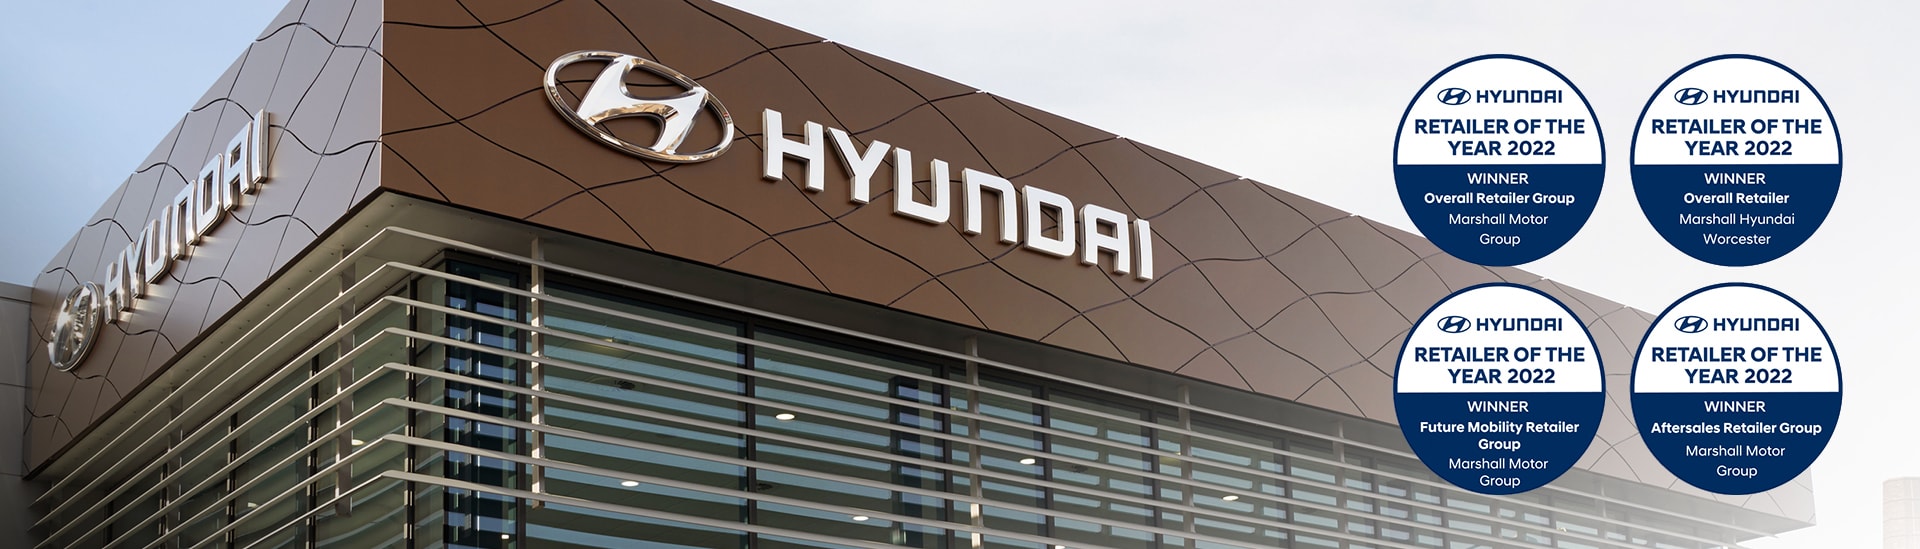 Hyundai UK retailer awards